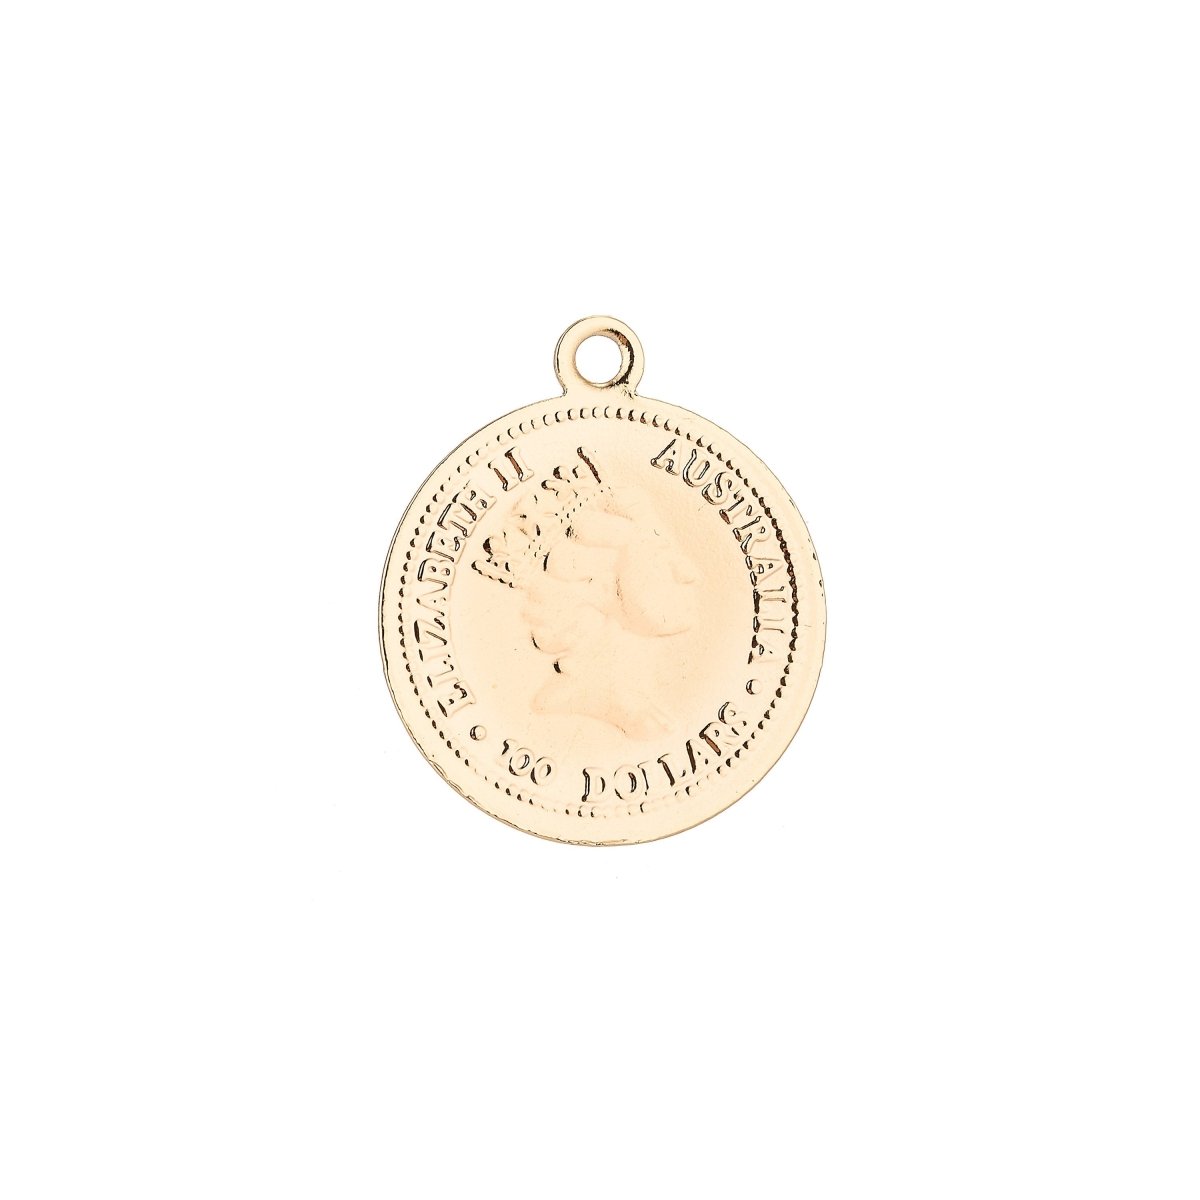 6x Australian Dollar Queen Elizabeth ll Gold Filled Coin Charm Pendant C-056 - DLUXCA